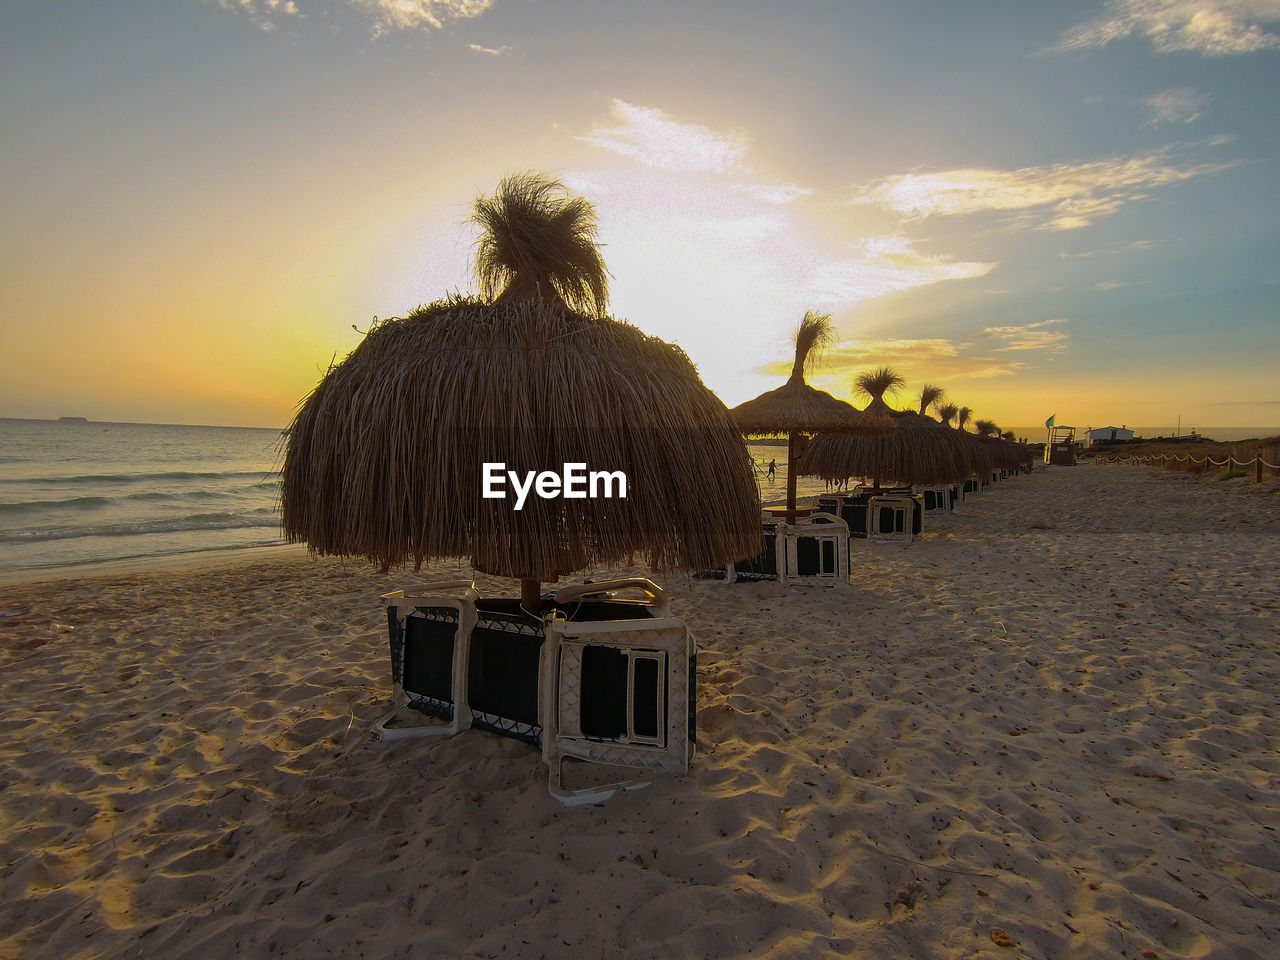 Beach umbrellas on sand with folded sunbeds, with blue sky and the sun setting. in mallorca, spain